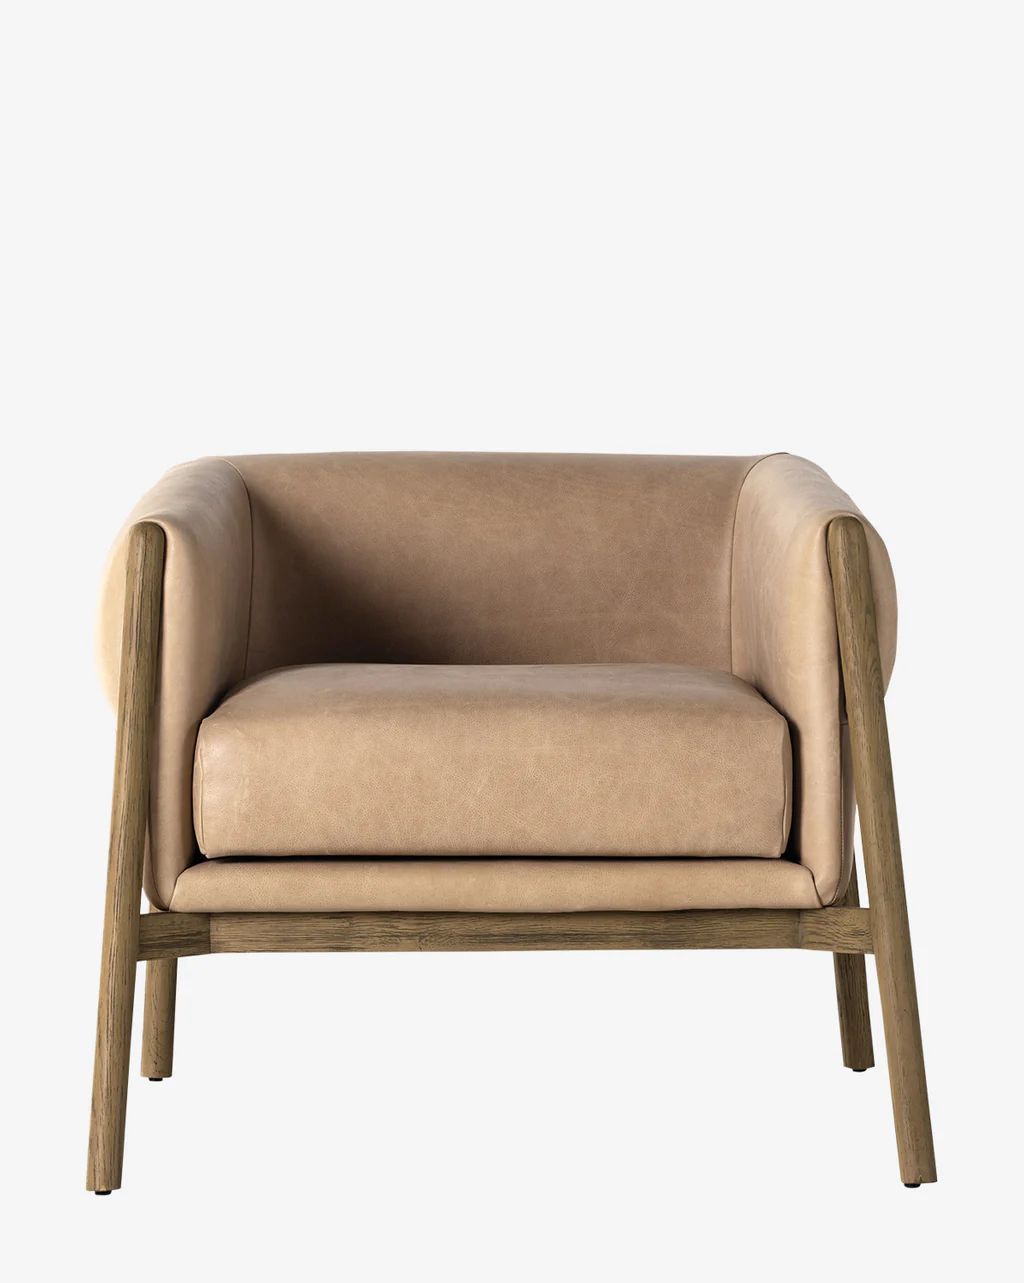 Nadine Chair | McGee & Co.